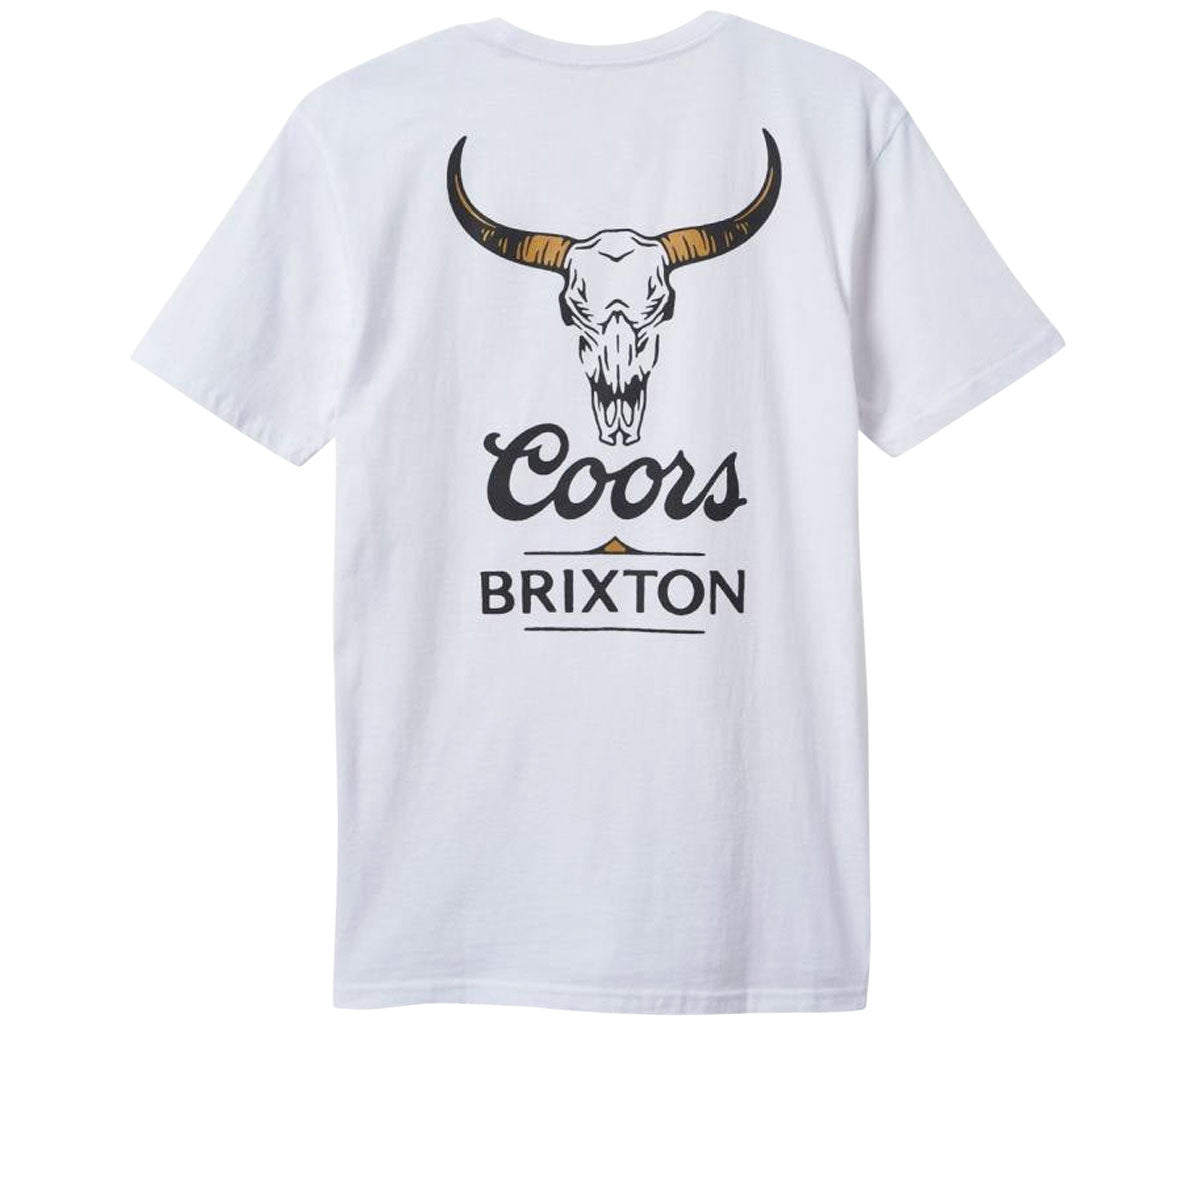 Brixton x Coors Bull T-Shirt - White image 1